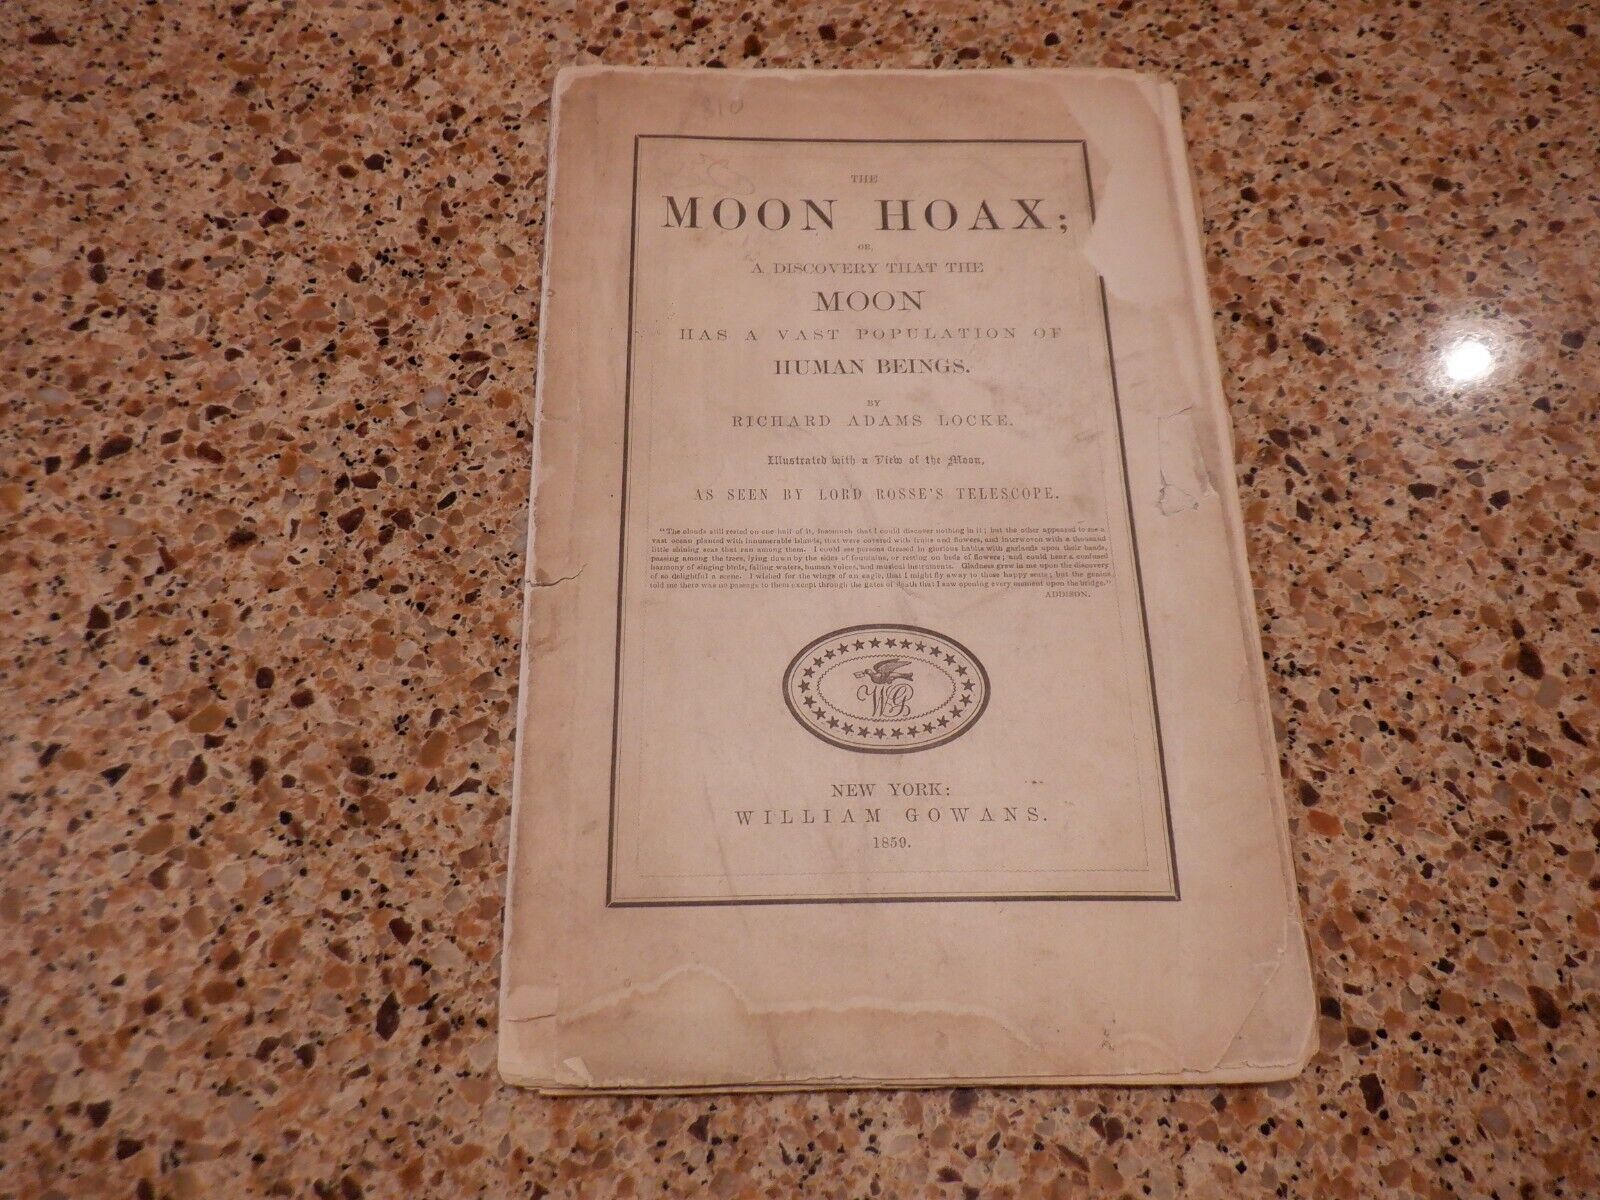 1859 63pg booklet The Moon Hoax by Richard Adams Locke, pub in NY William Gowans